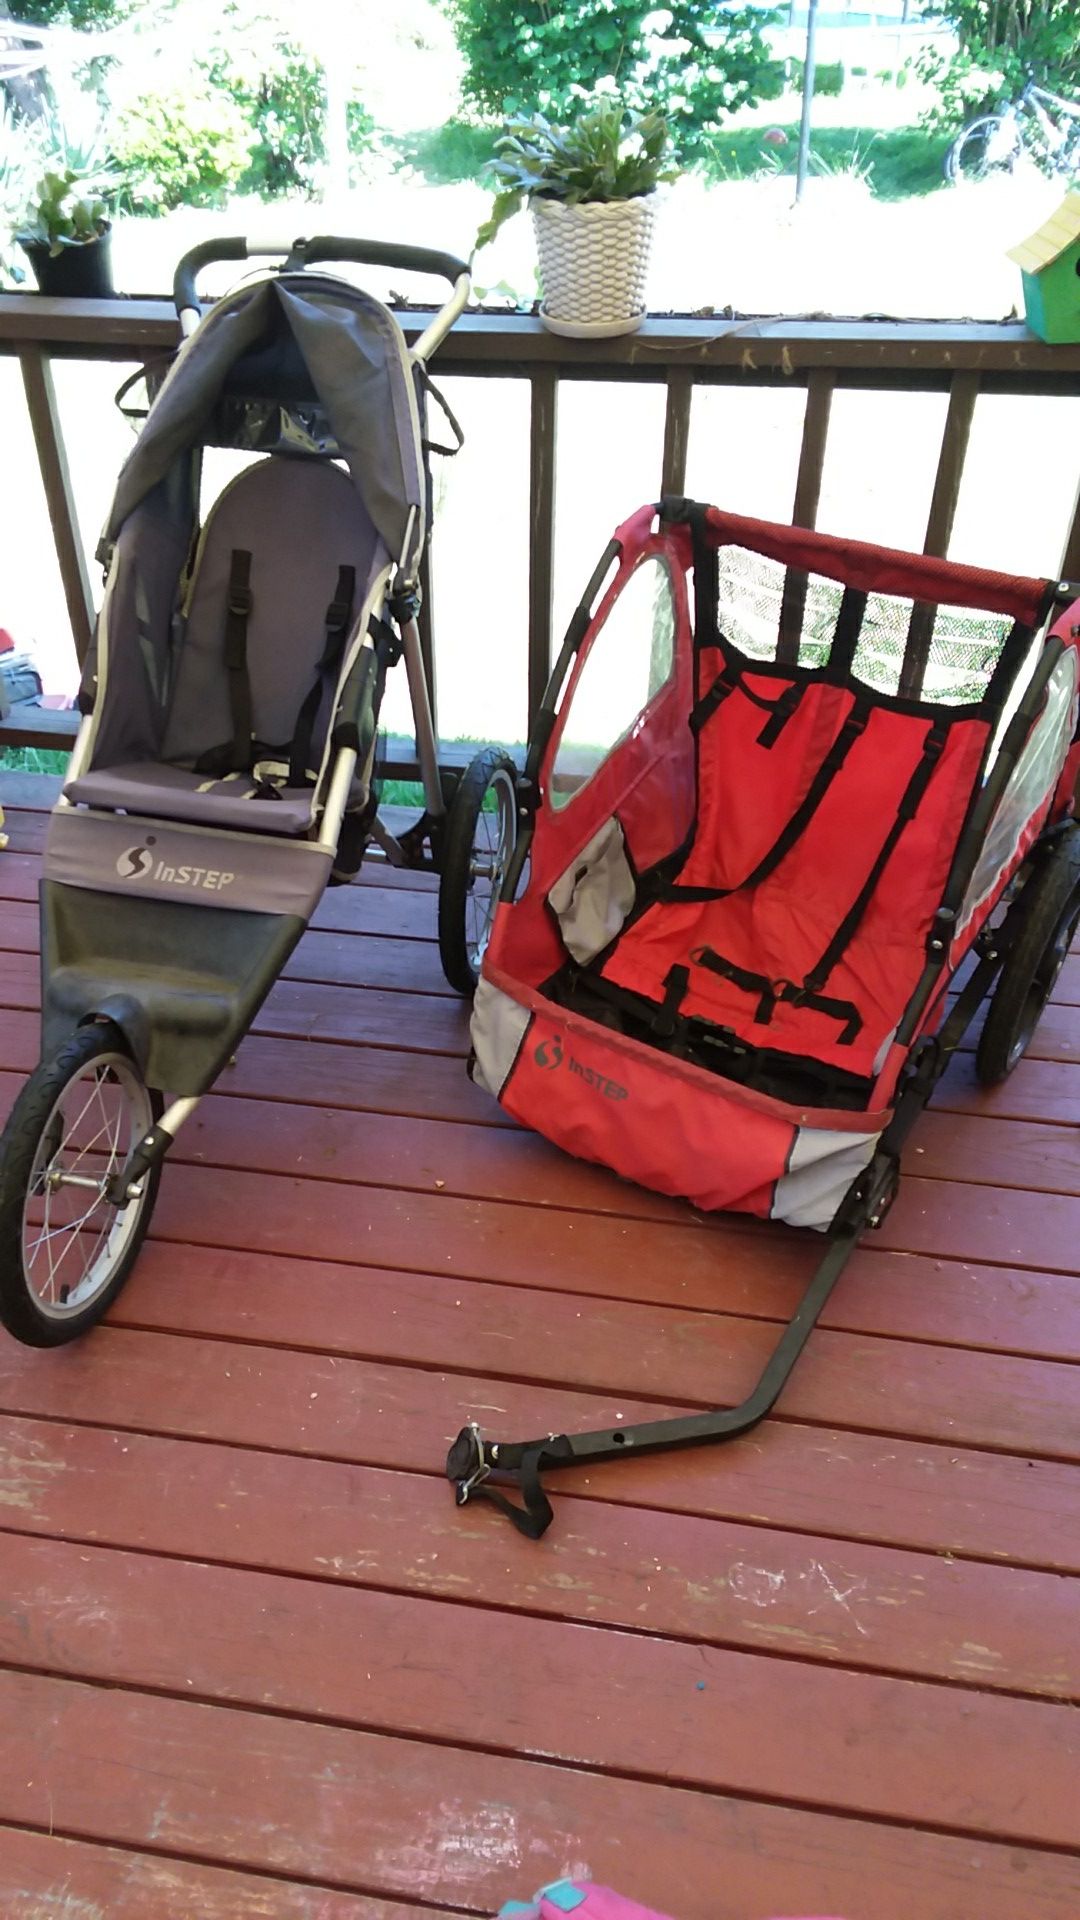 Bike trailer and stroller